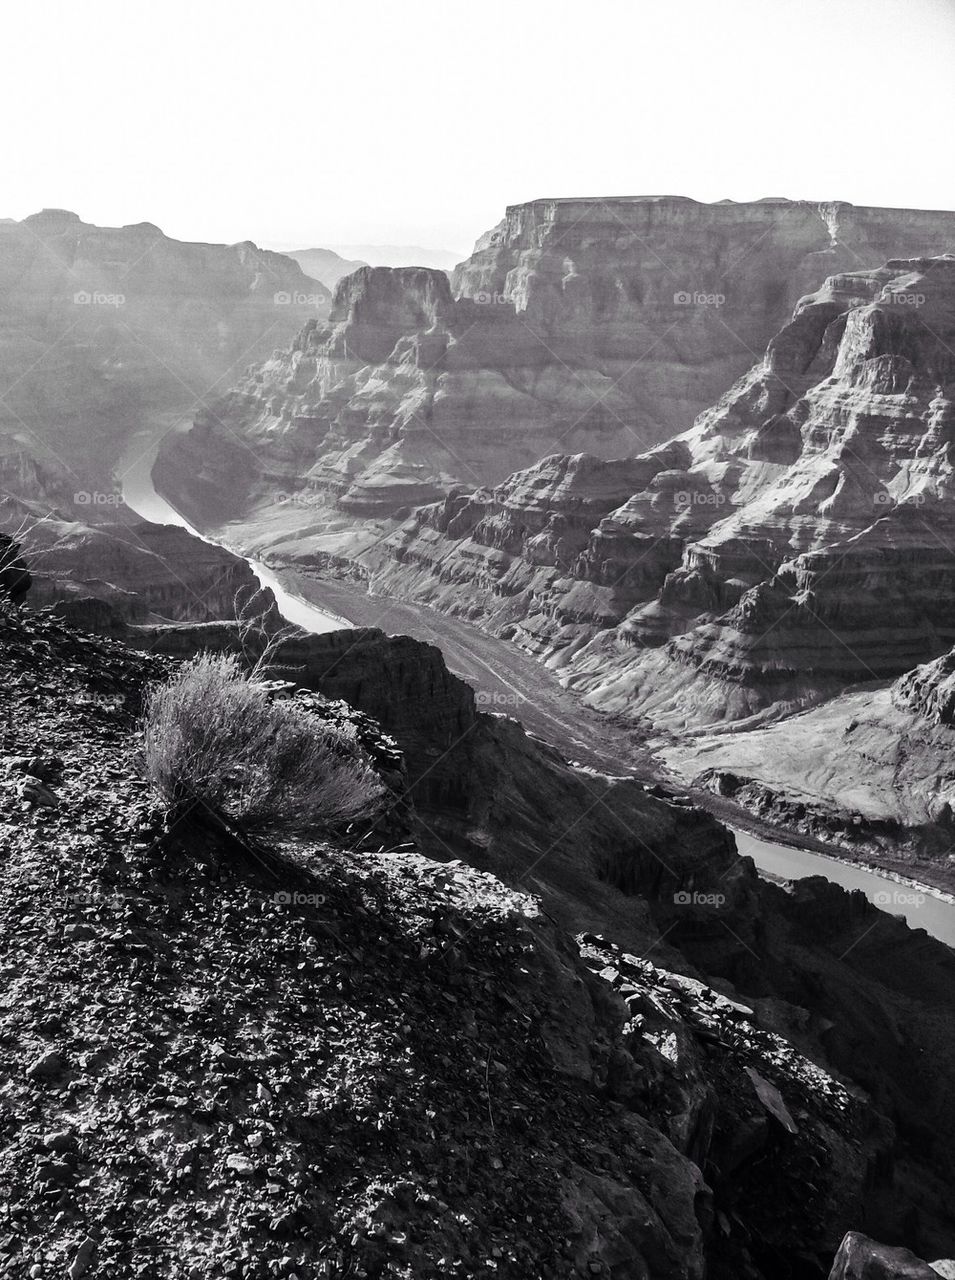 The Grand Canyon south rim